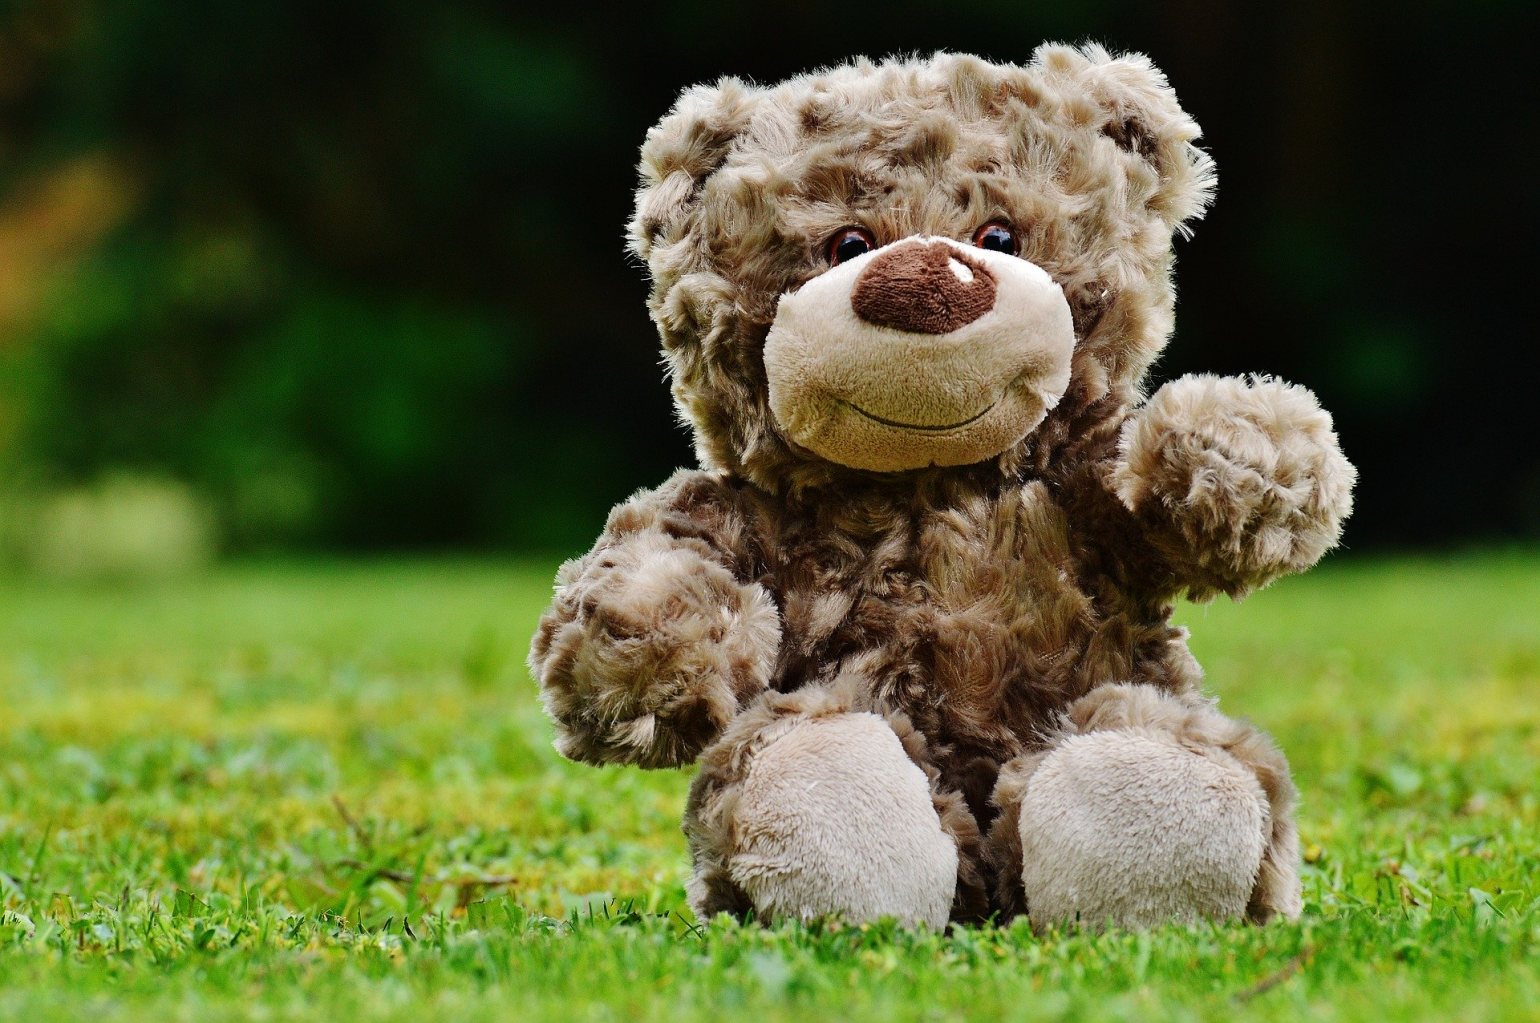 Happy teddy bear on a field of grass